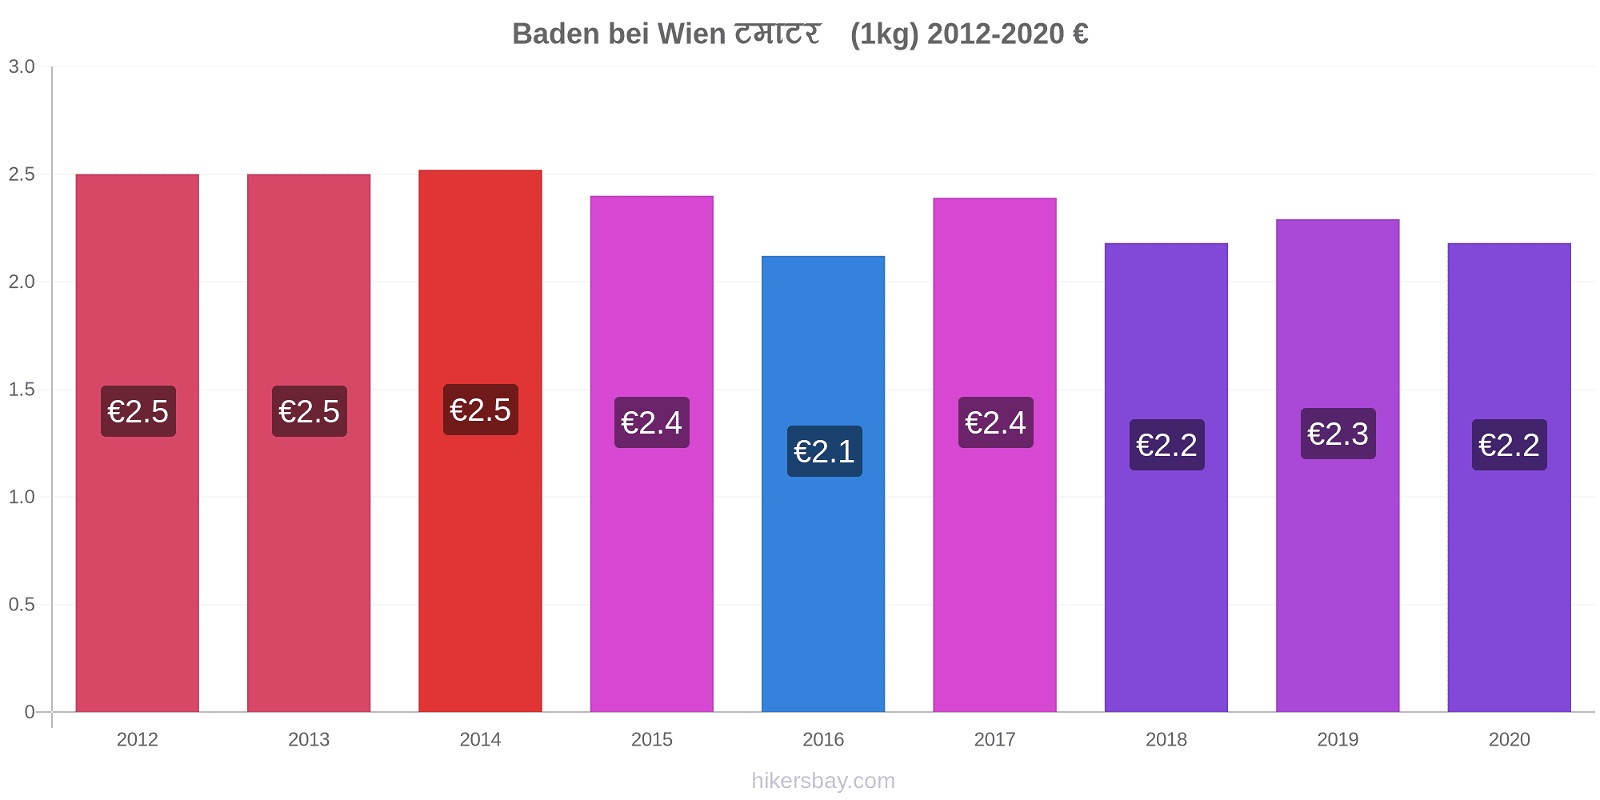 Baden bei Wien मूल्य परिवर्तन टमाटर (1kg) hikersbay.com